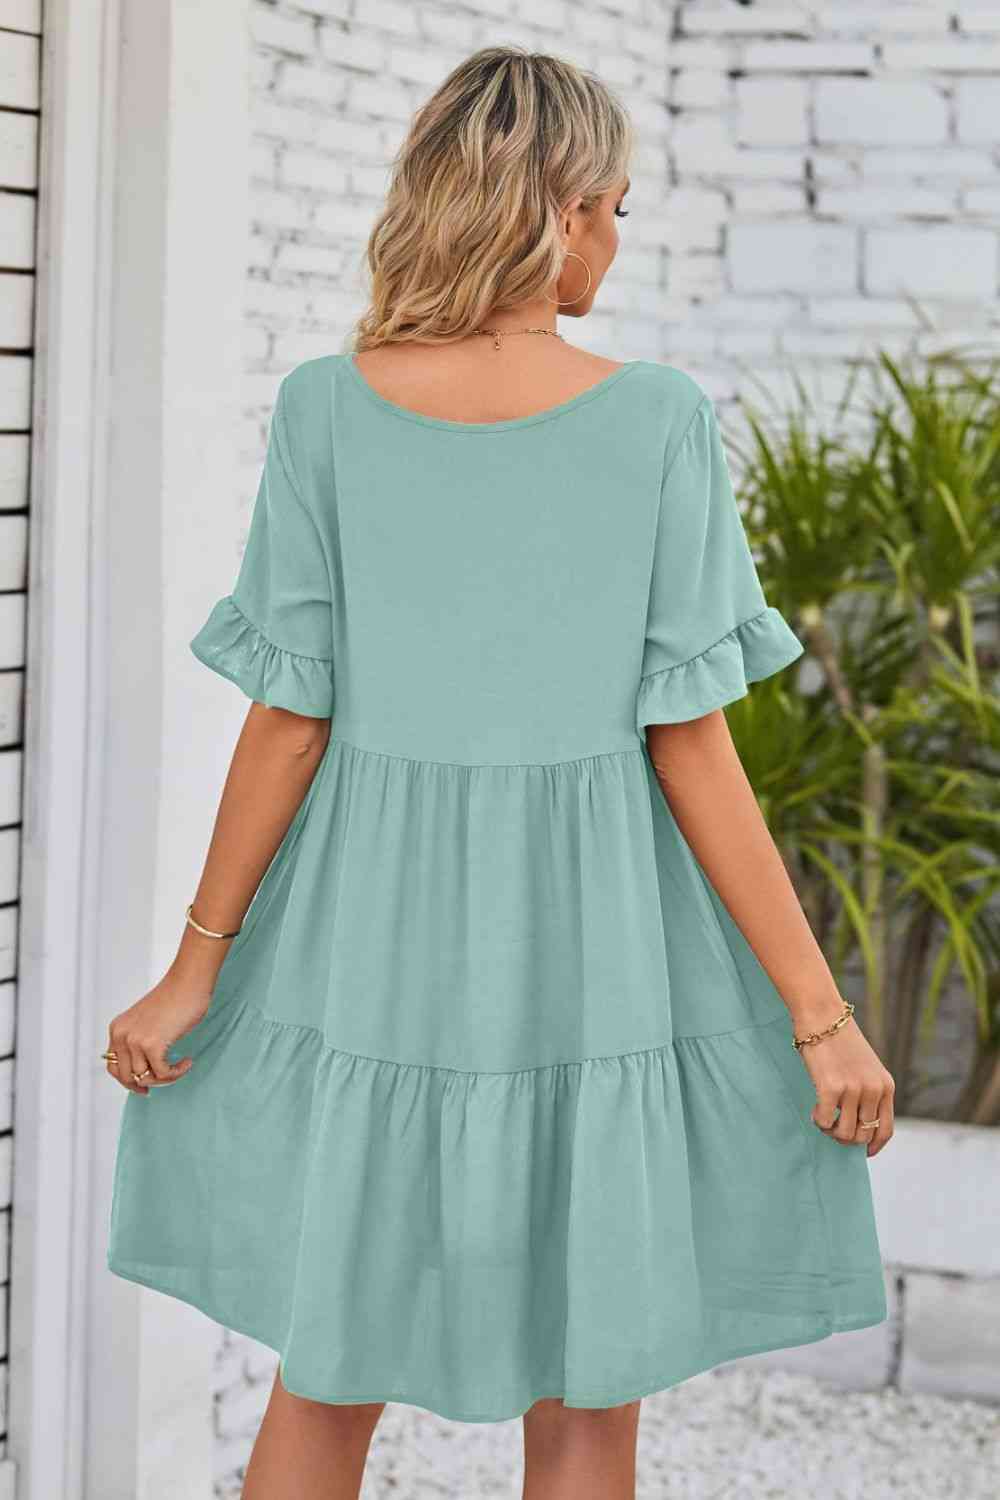 V-Neck Flounce Sleeve Tiered Dress (8 Colors)  Krazy Heart Designs Boutique   